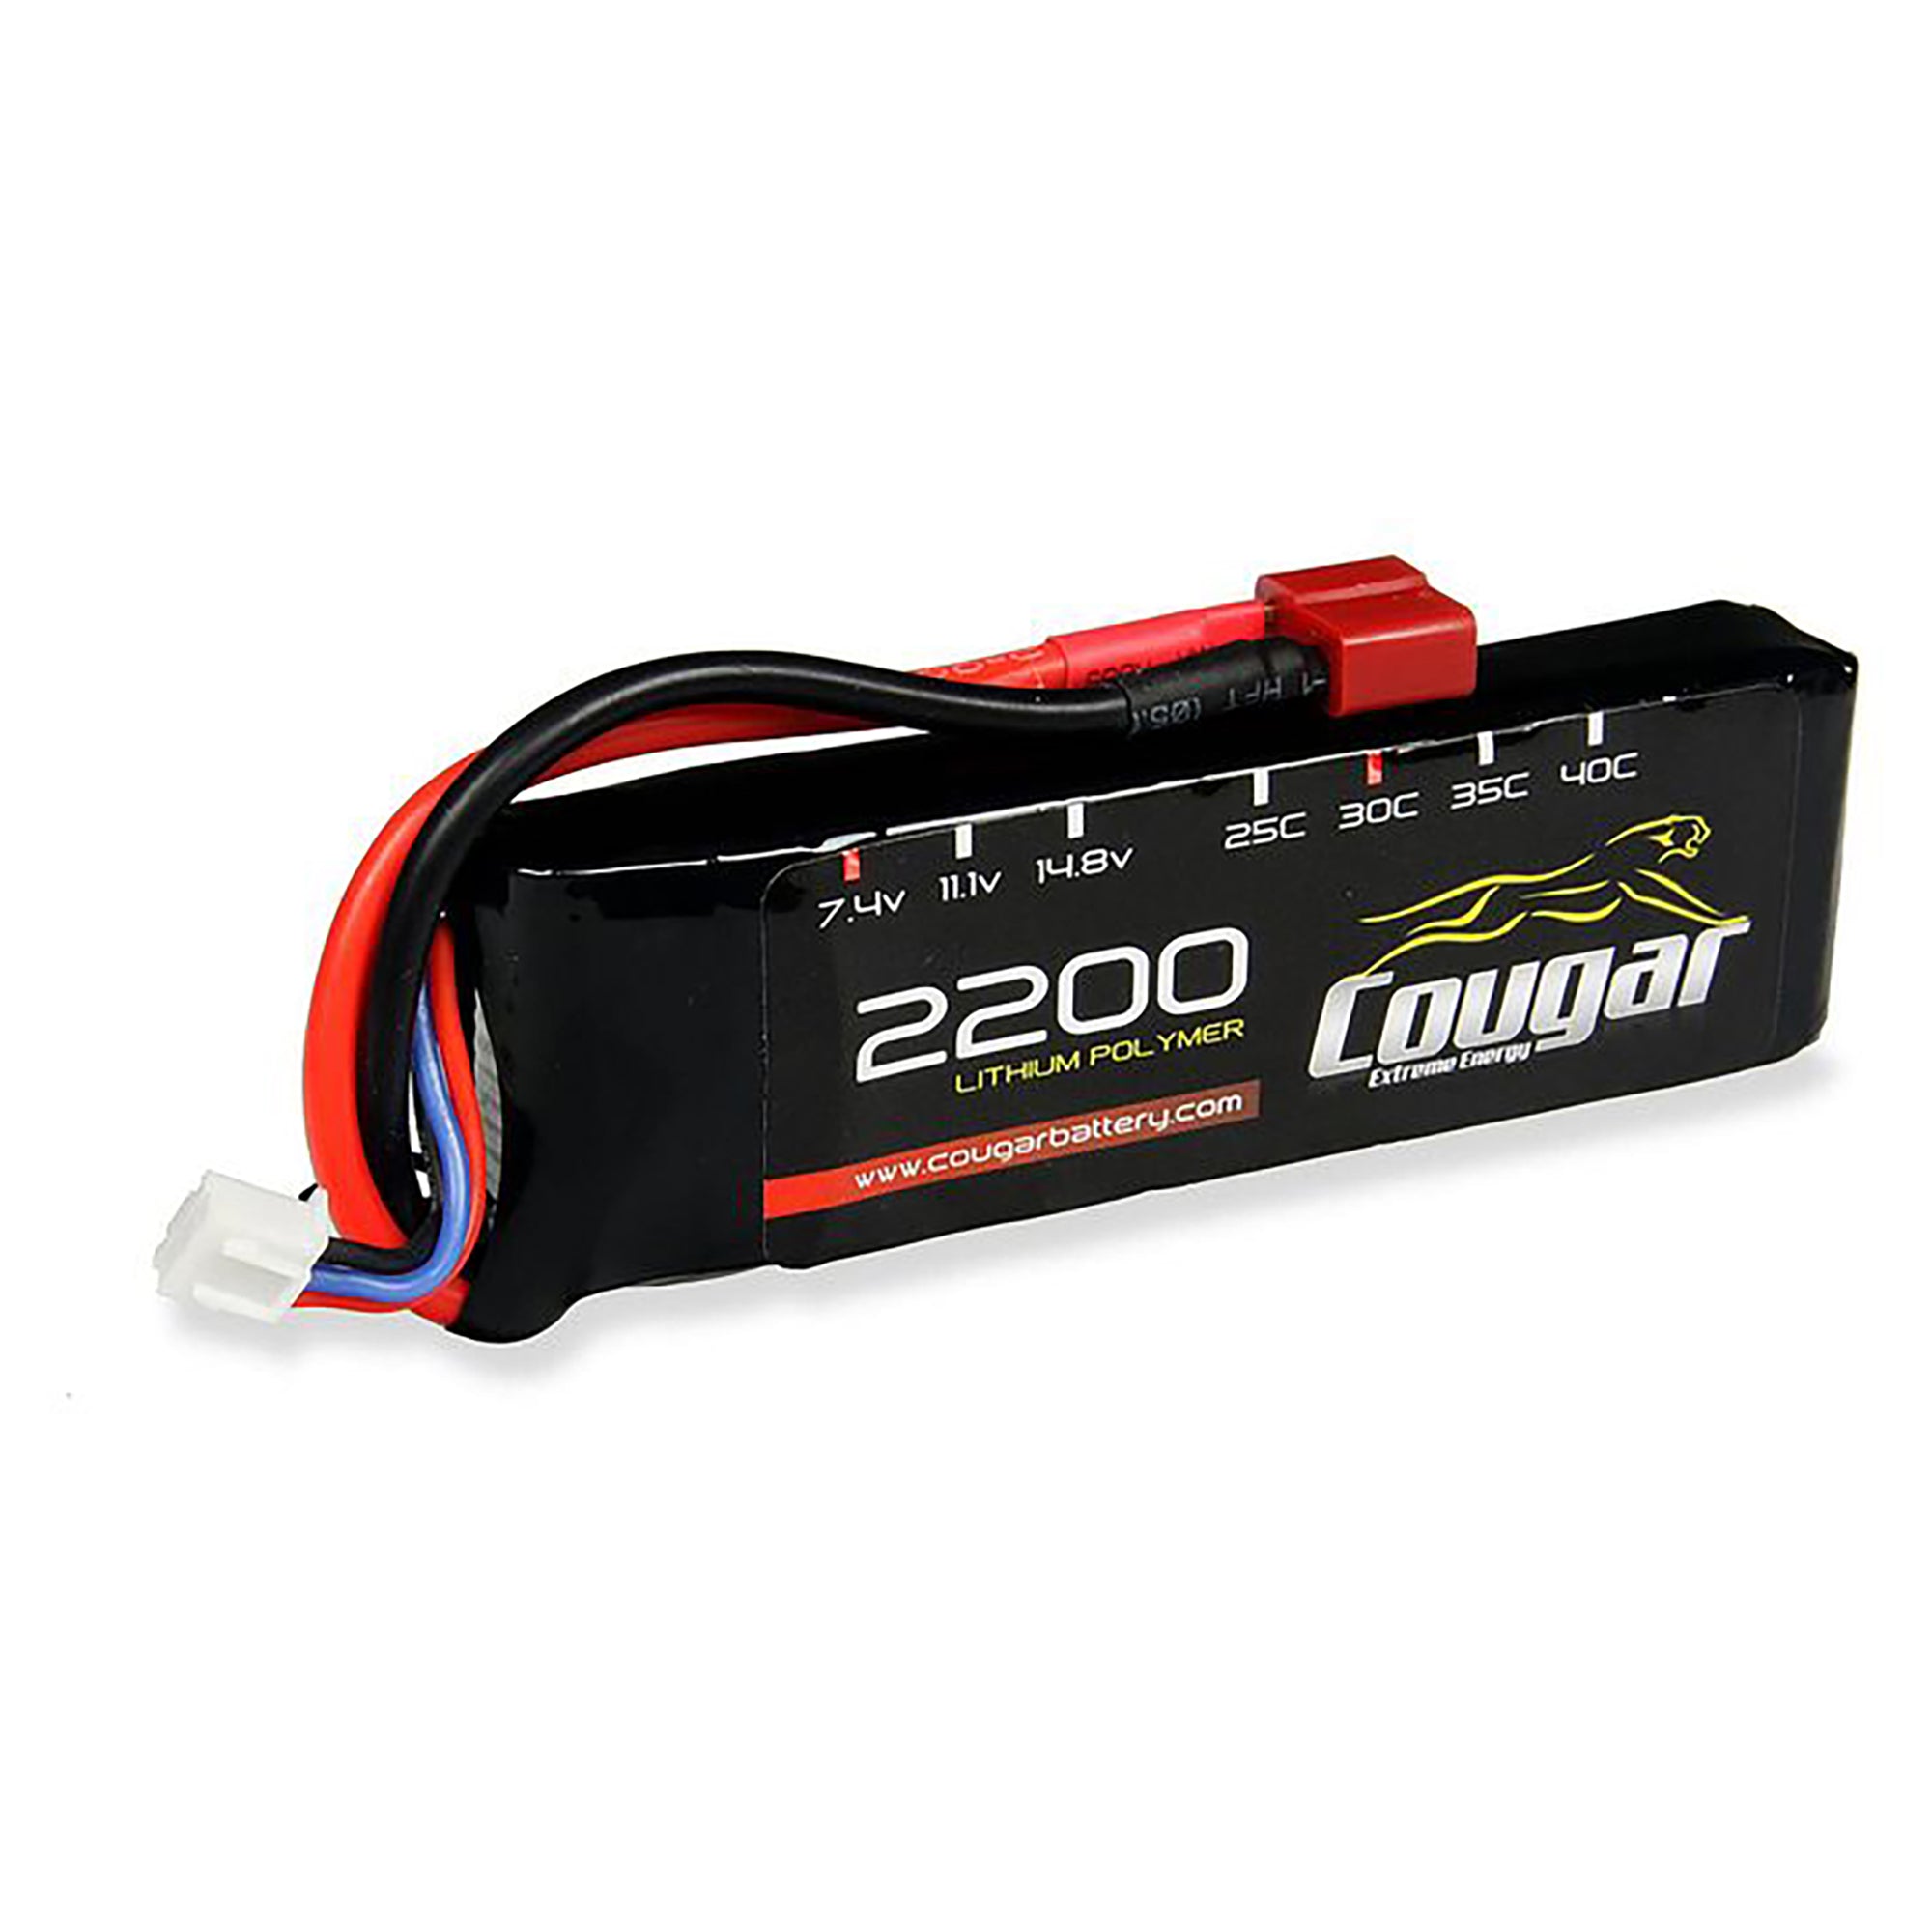 Cougar 2200mAh 7.4v 2S 30C Soft Case LiPo Battery